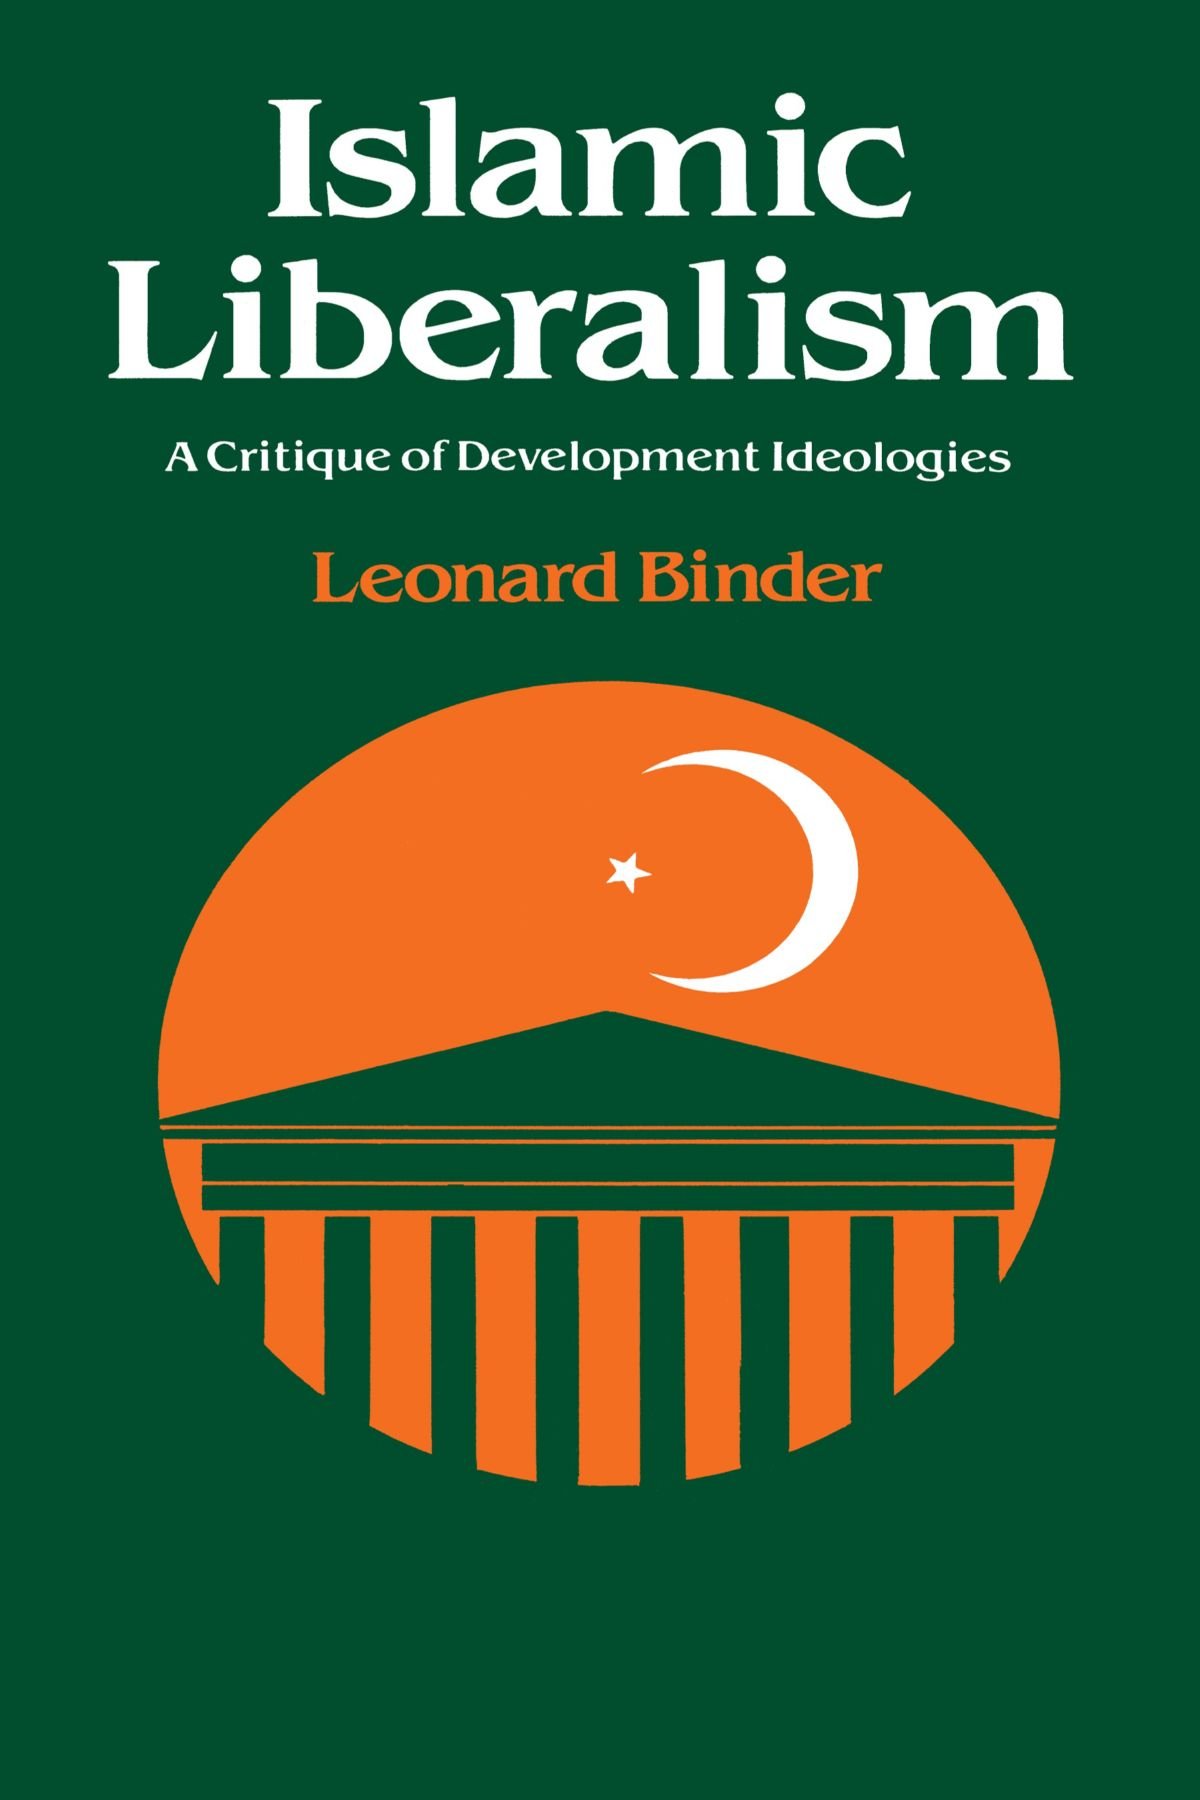 Islamic liberalism magazine reviews